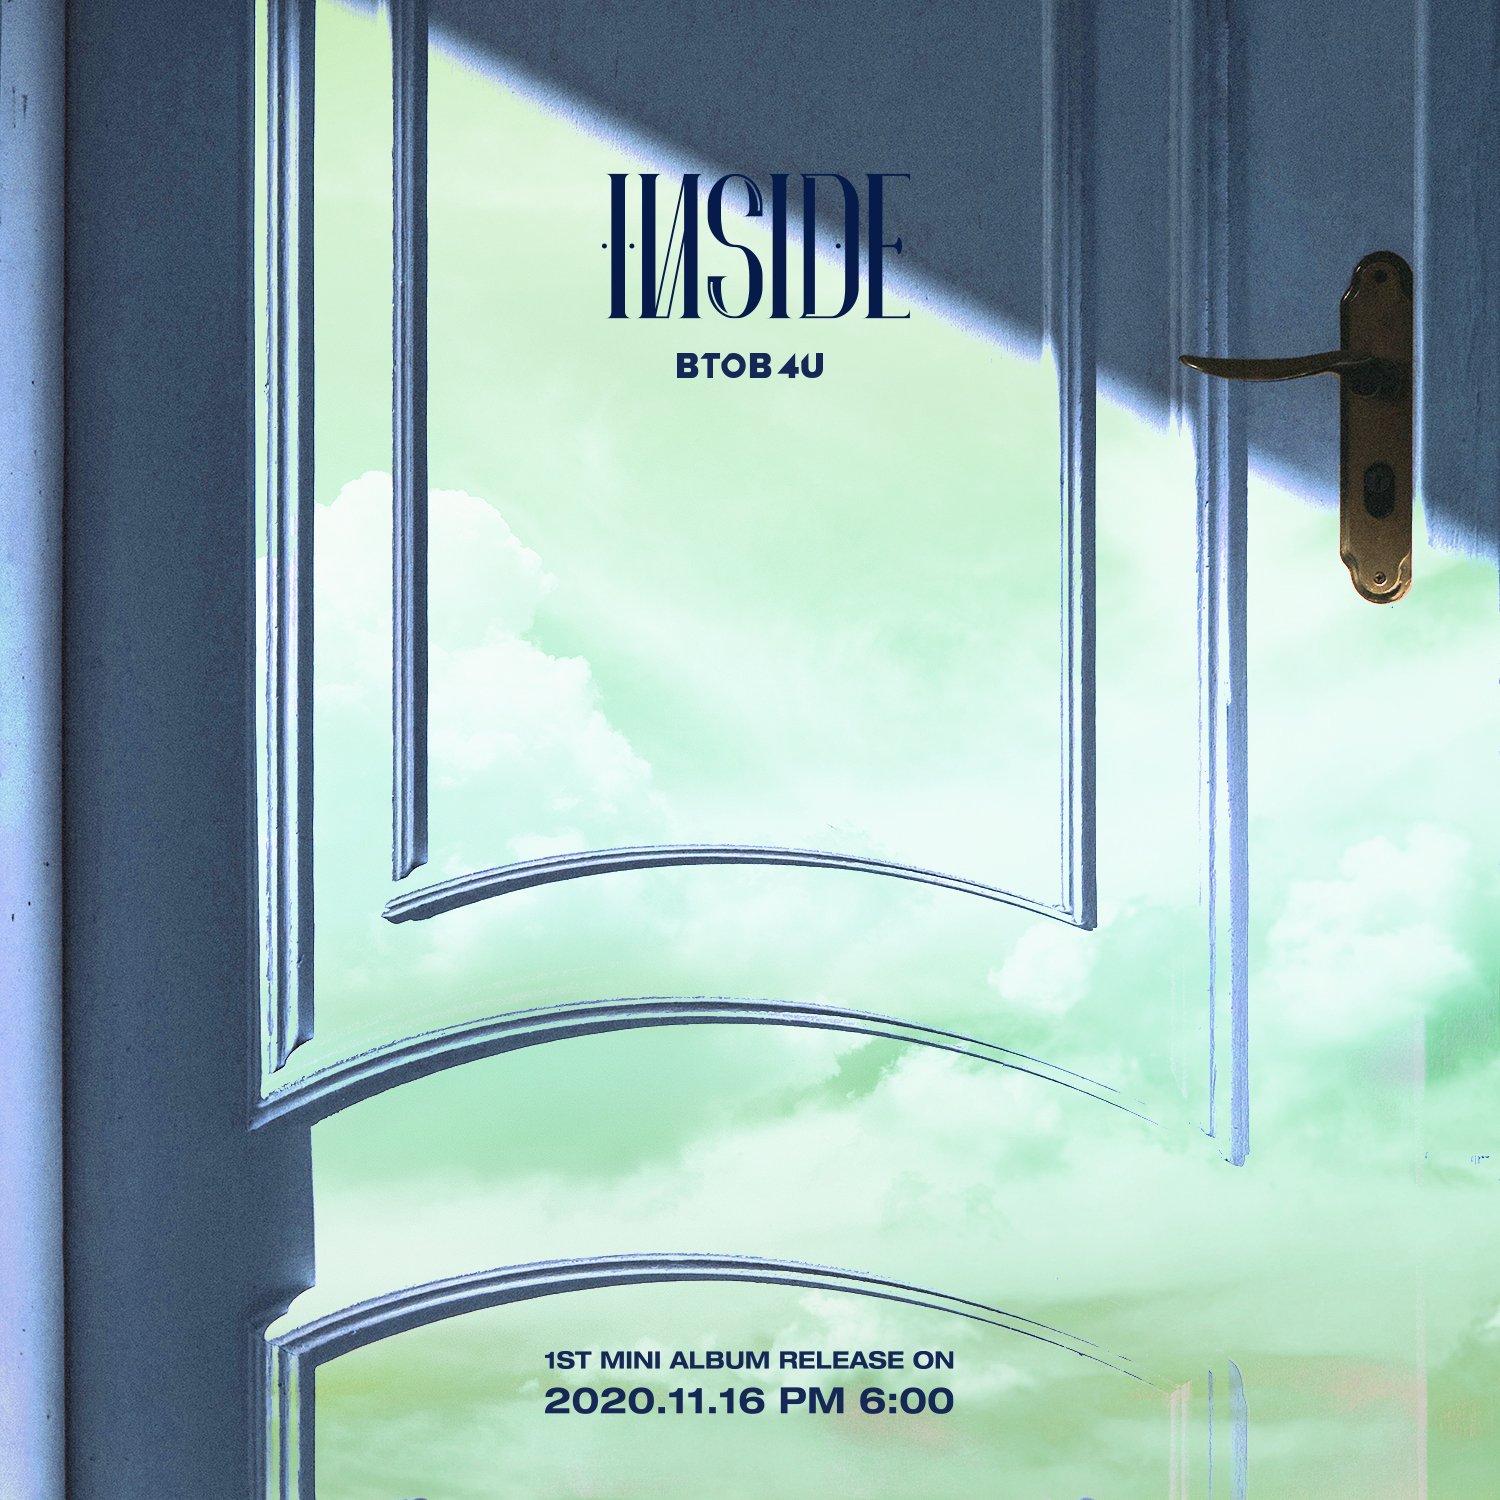 btob-4u-to-release-1st-mini-album-inside-on-november-16-3